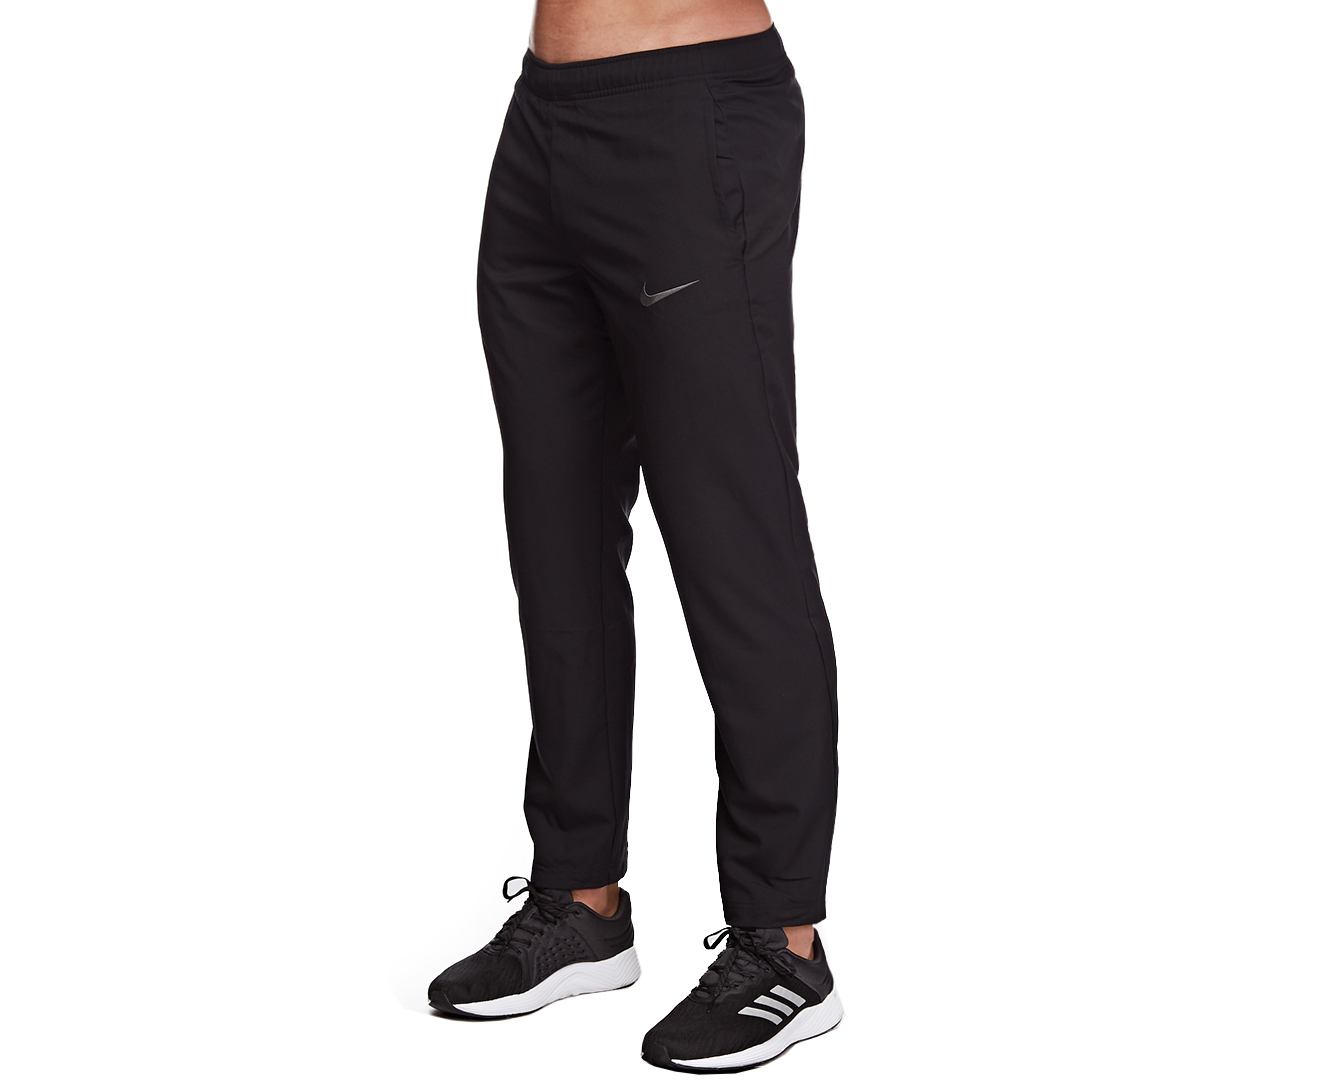 Nike Men's Dry Training Pant - Black/Anthracite/Dark Grey | Catch.co.nz